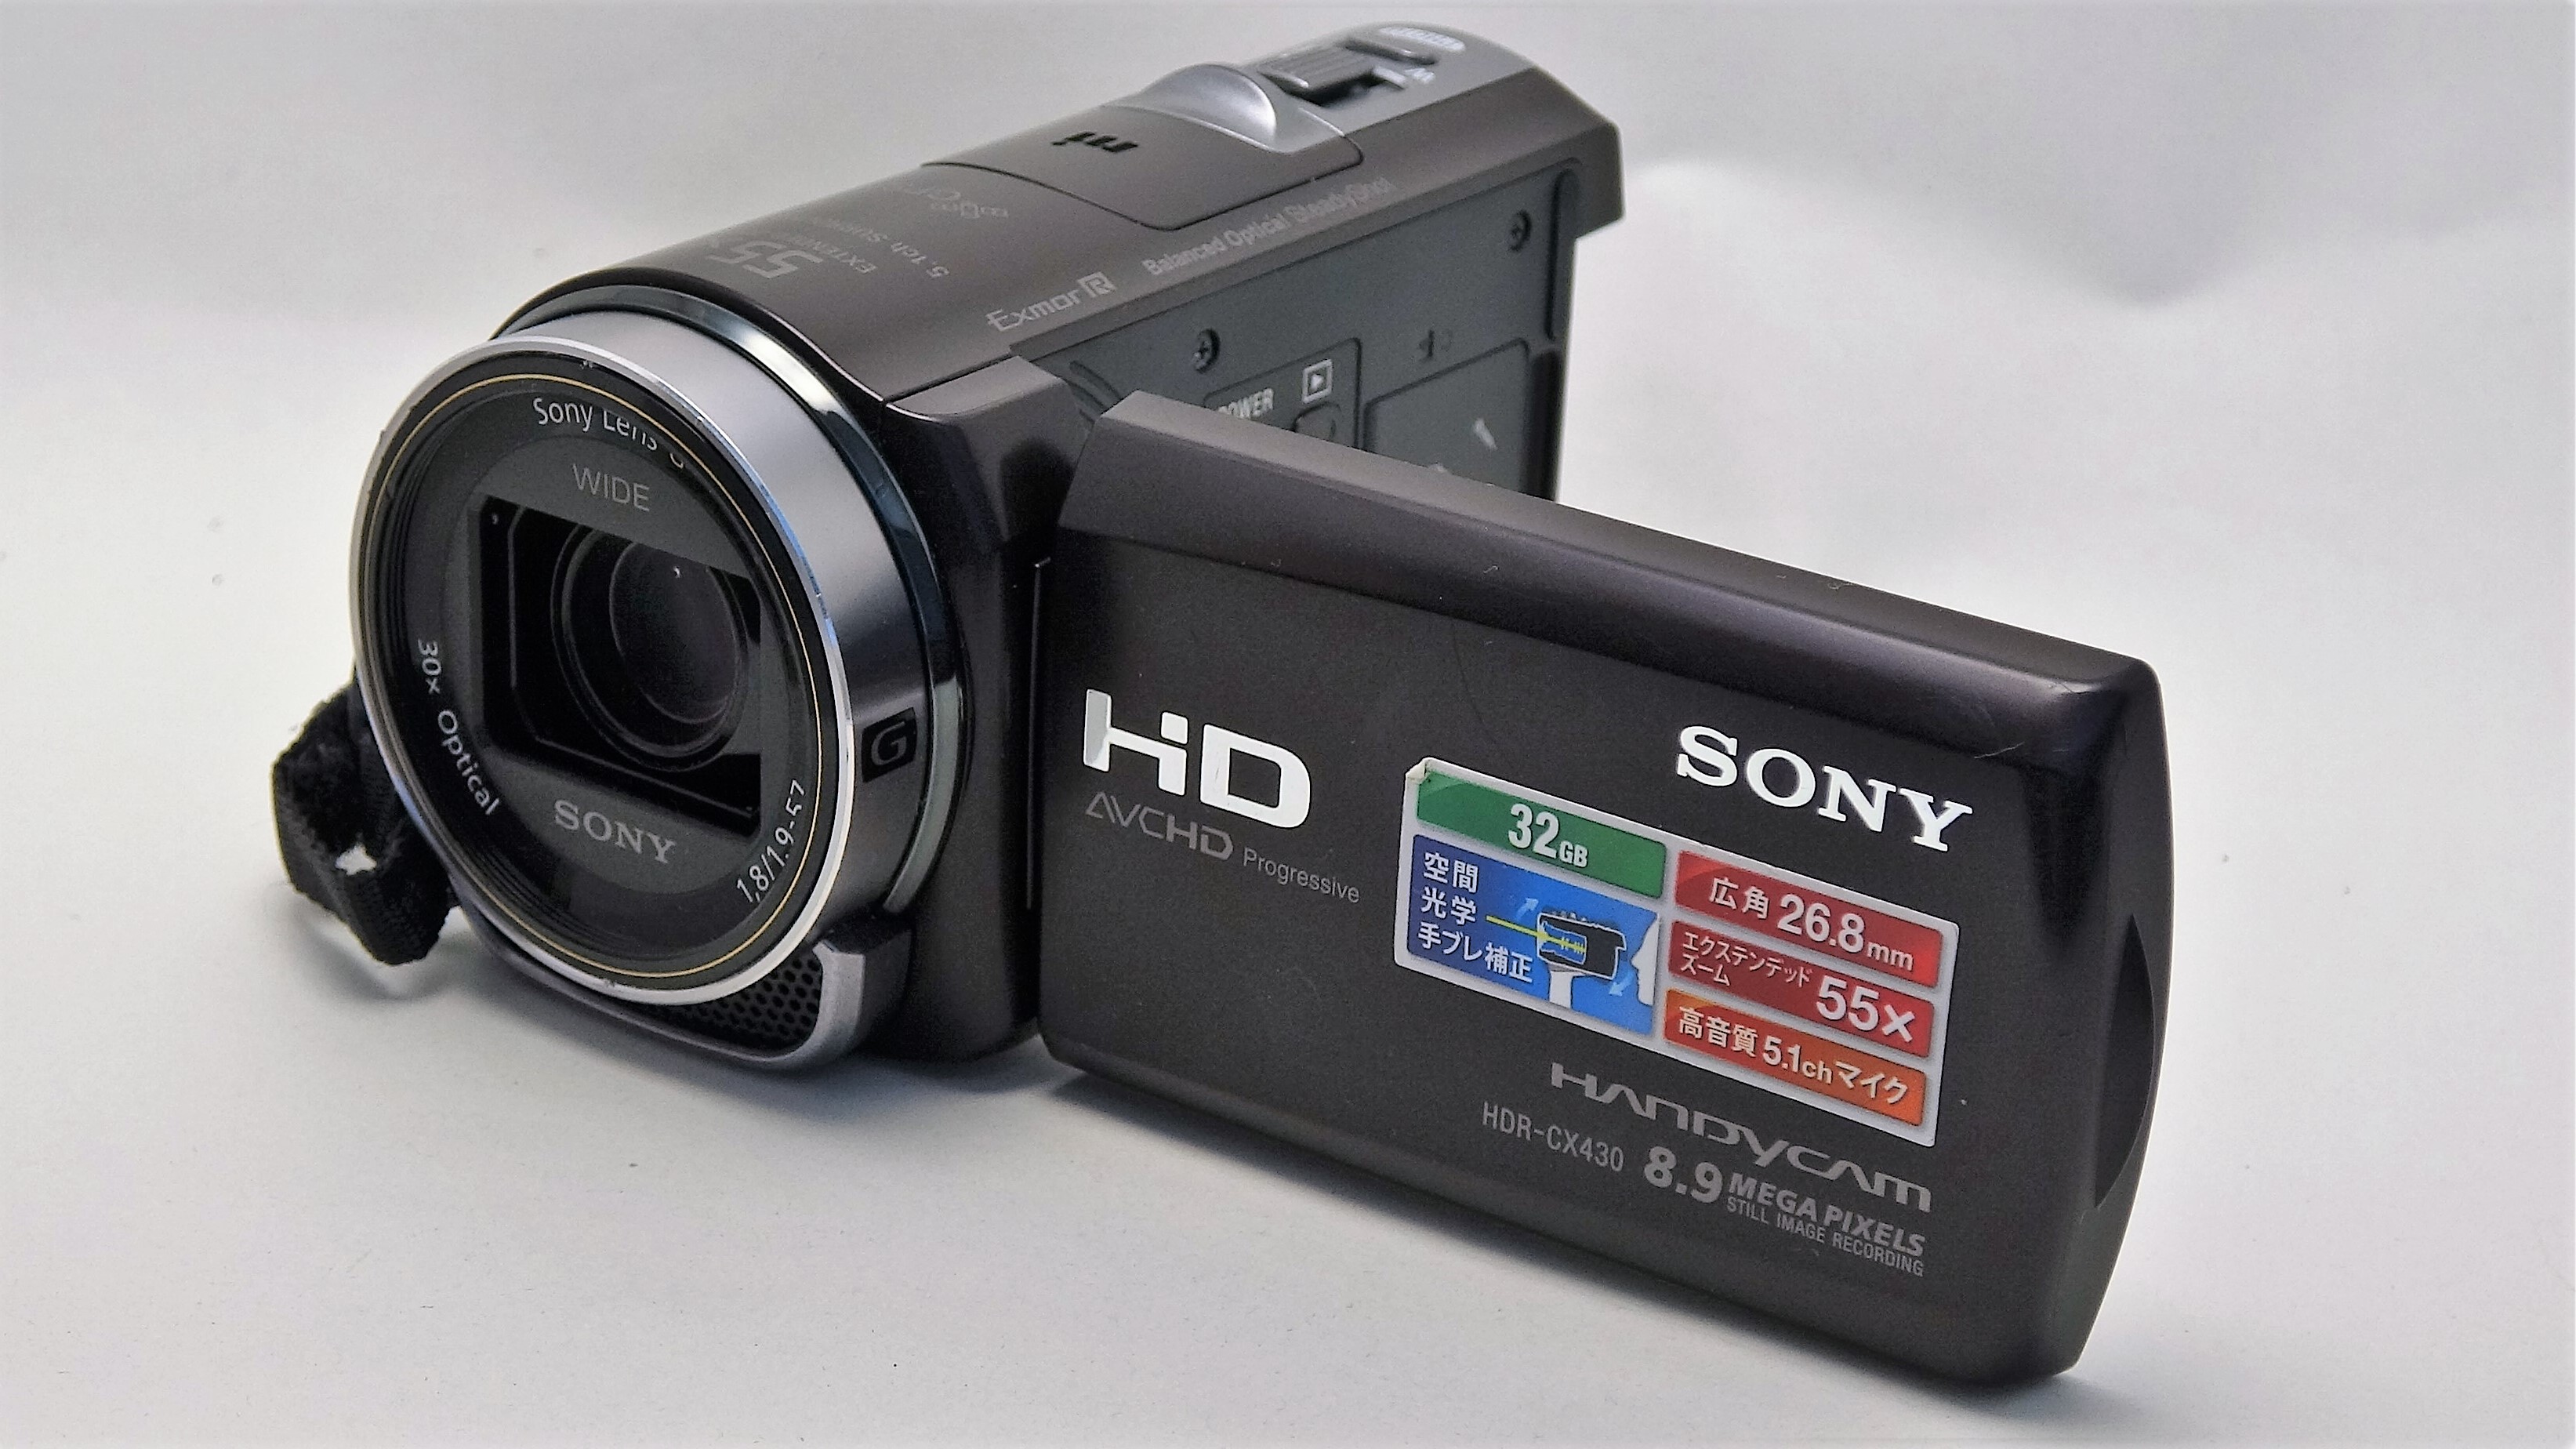 HDR-CX430-Sony-Handycam 削除したデータの復元